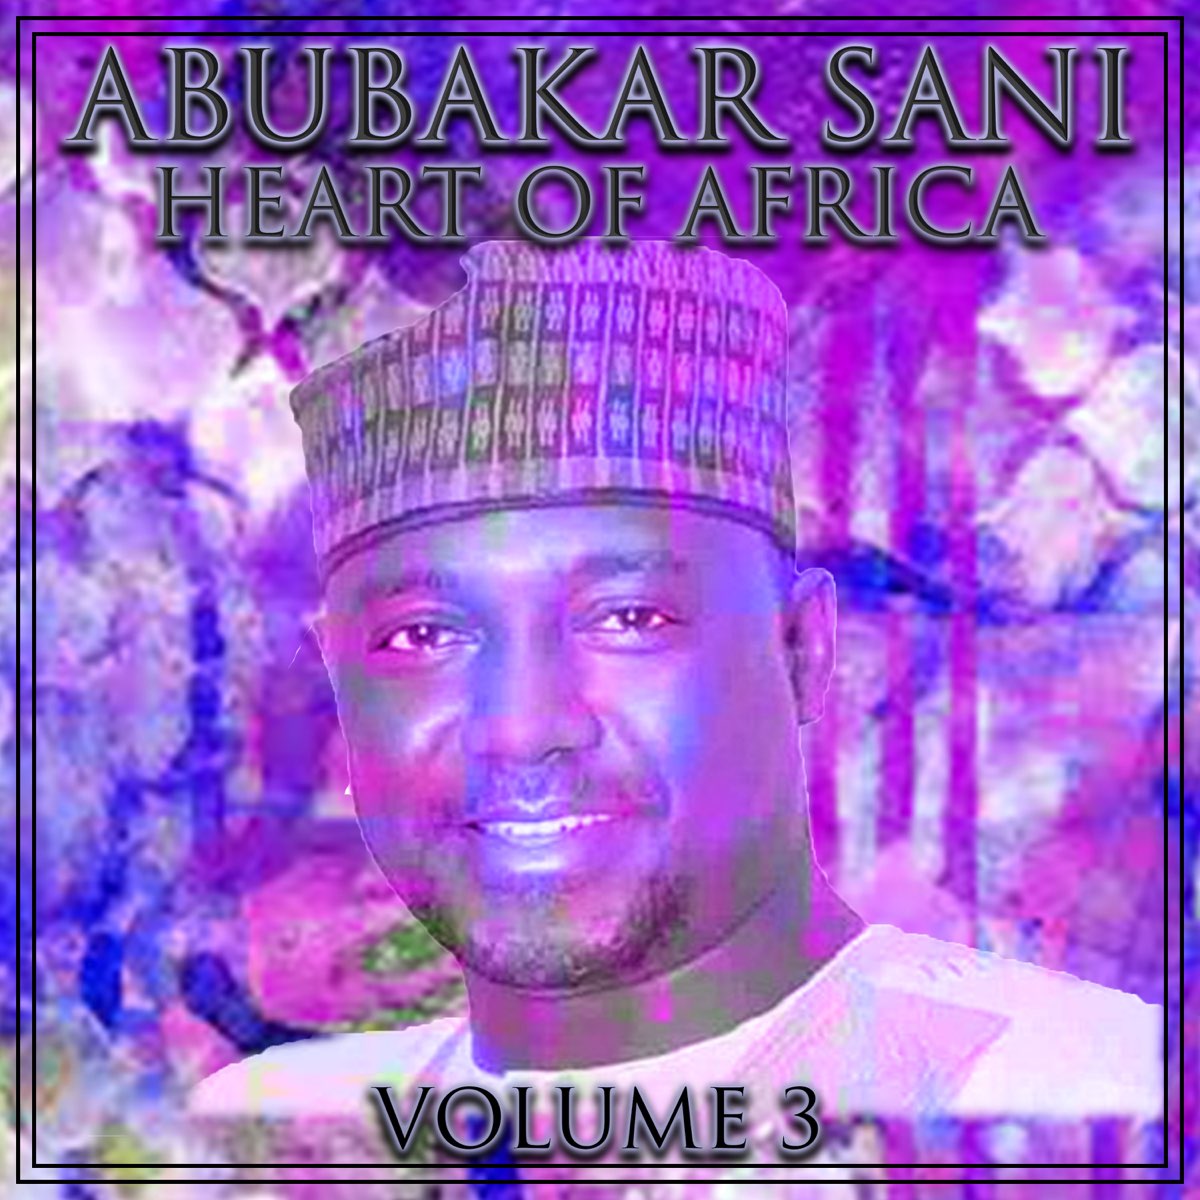 Heart of Africa, Vol. 3 by Abubakar Sani on Apple Music